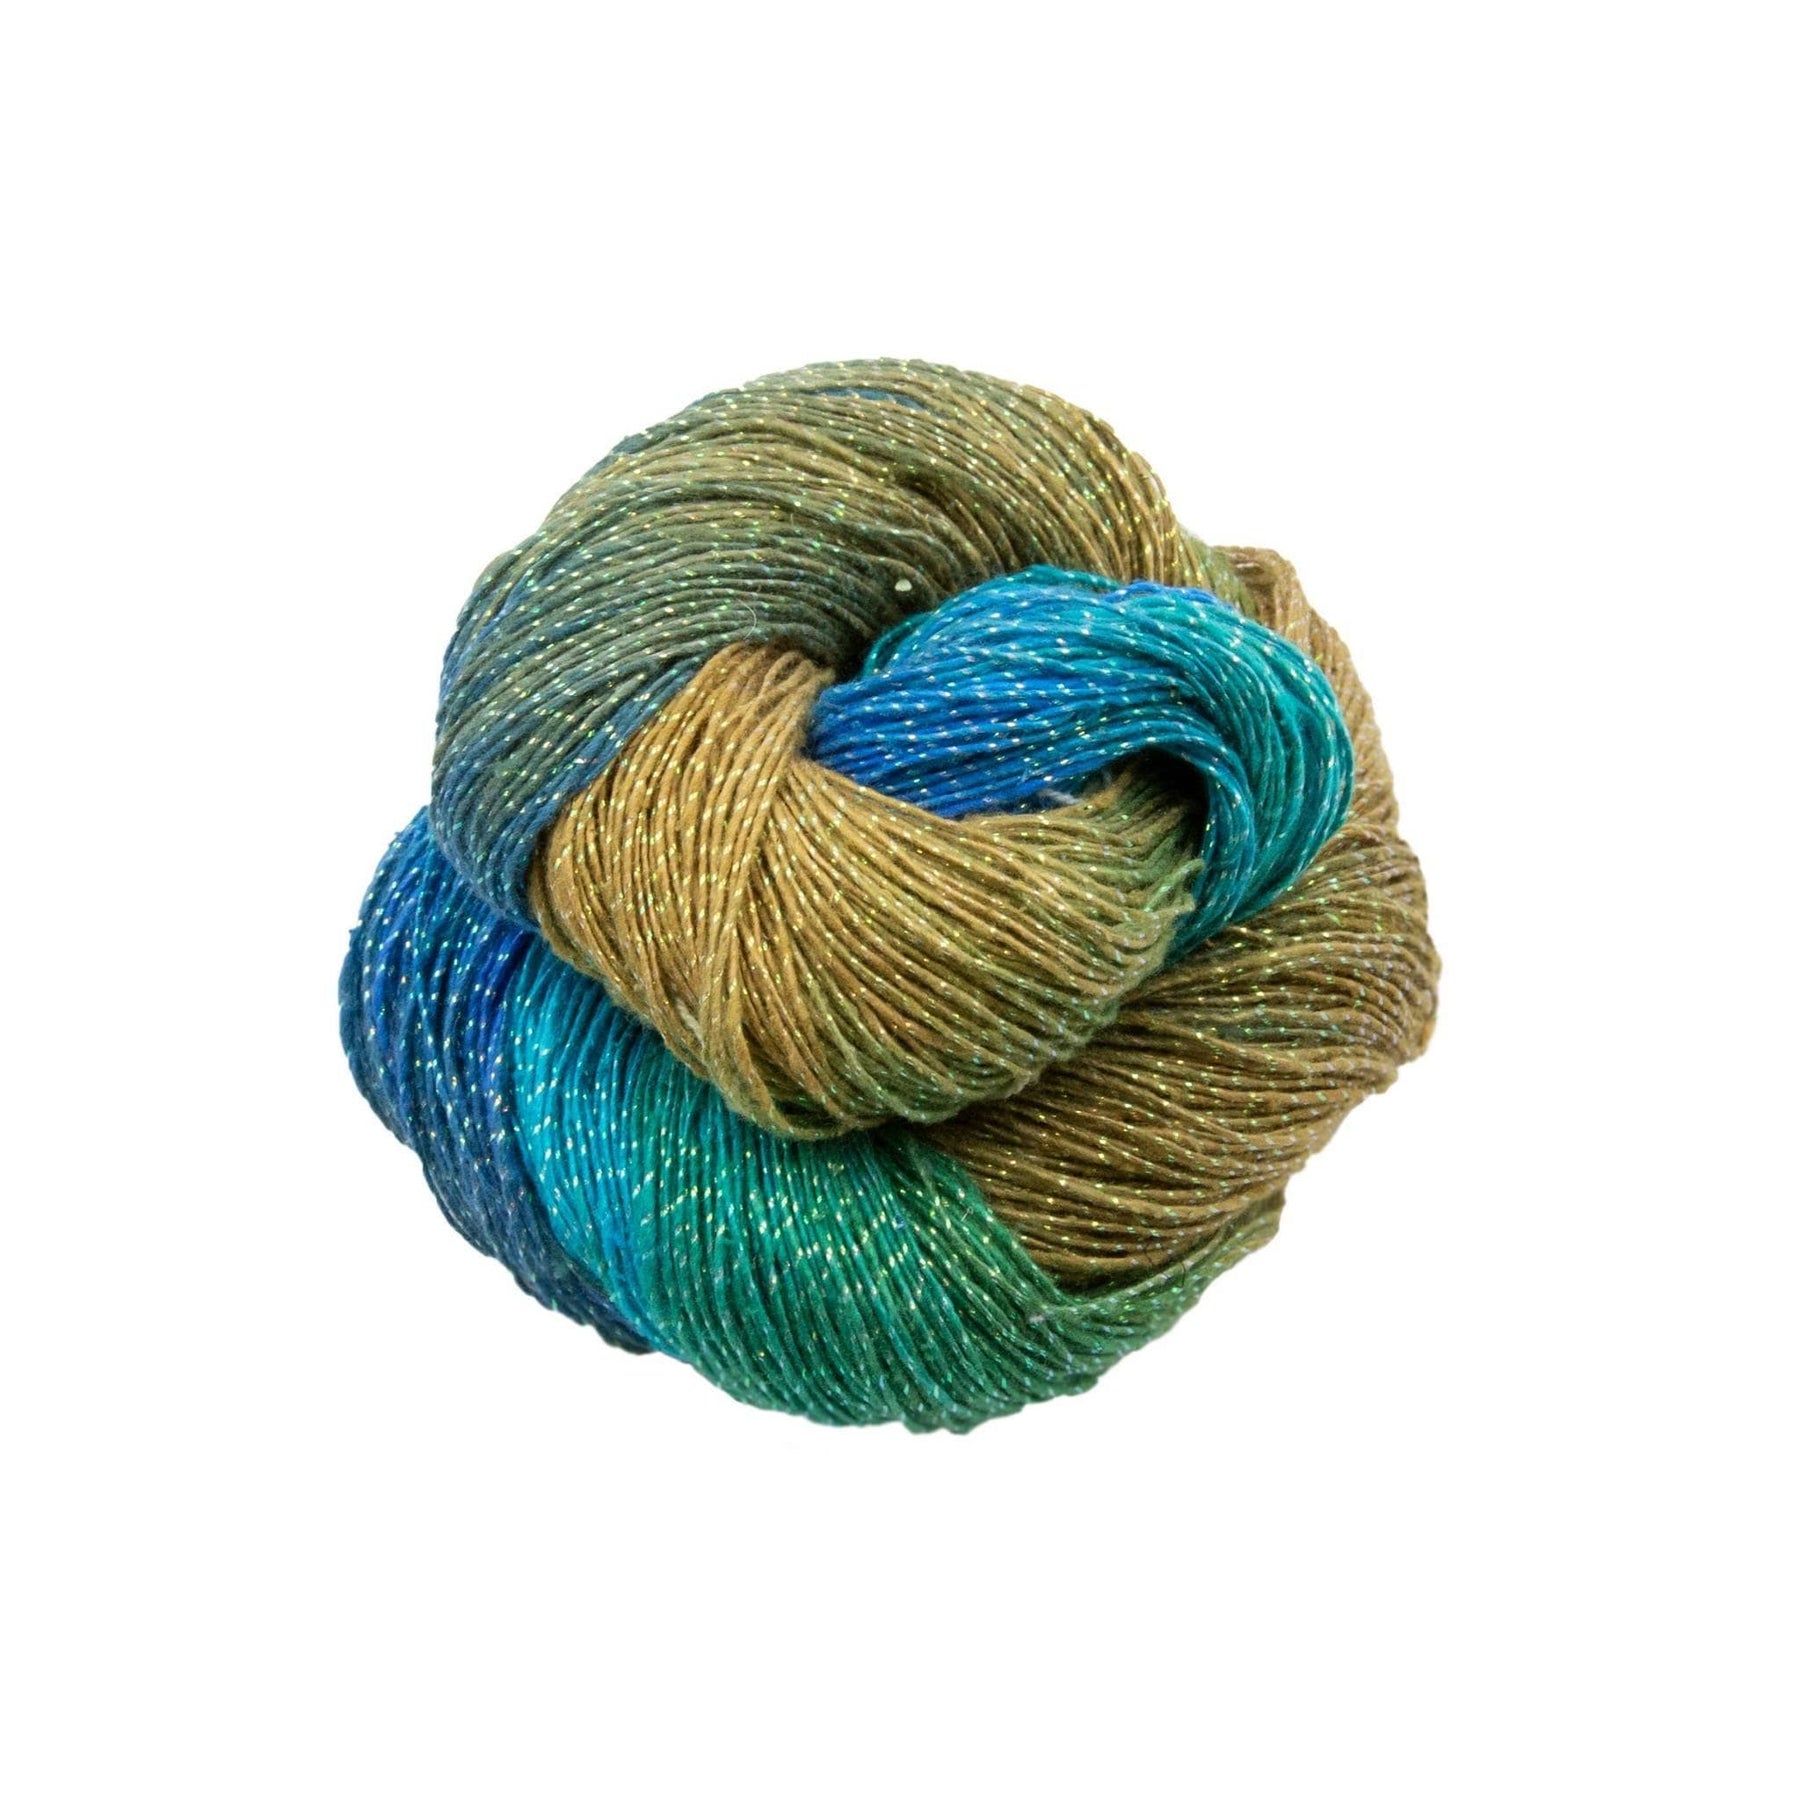 Silk Knitting Yarns from lace to bulky at Fabulous Yarn